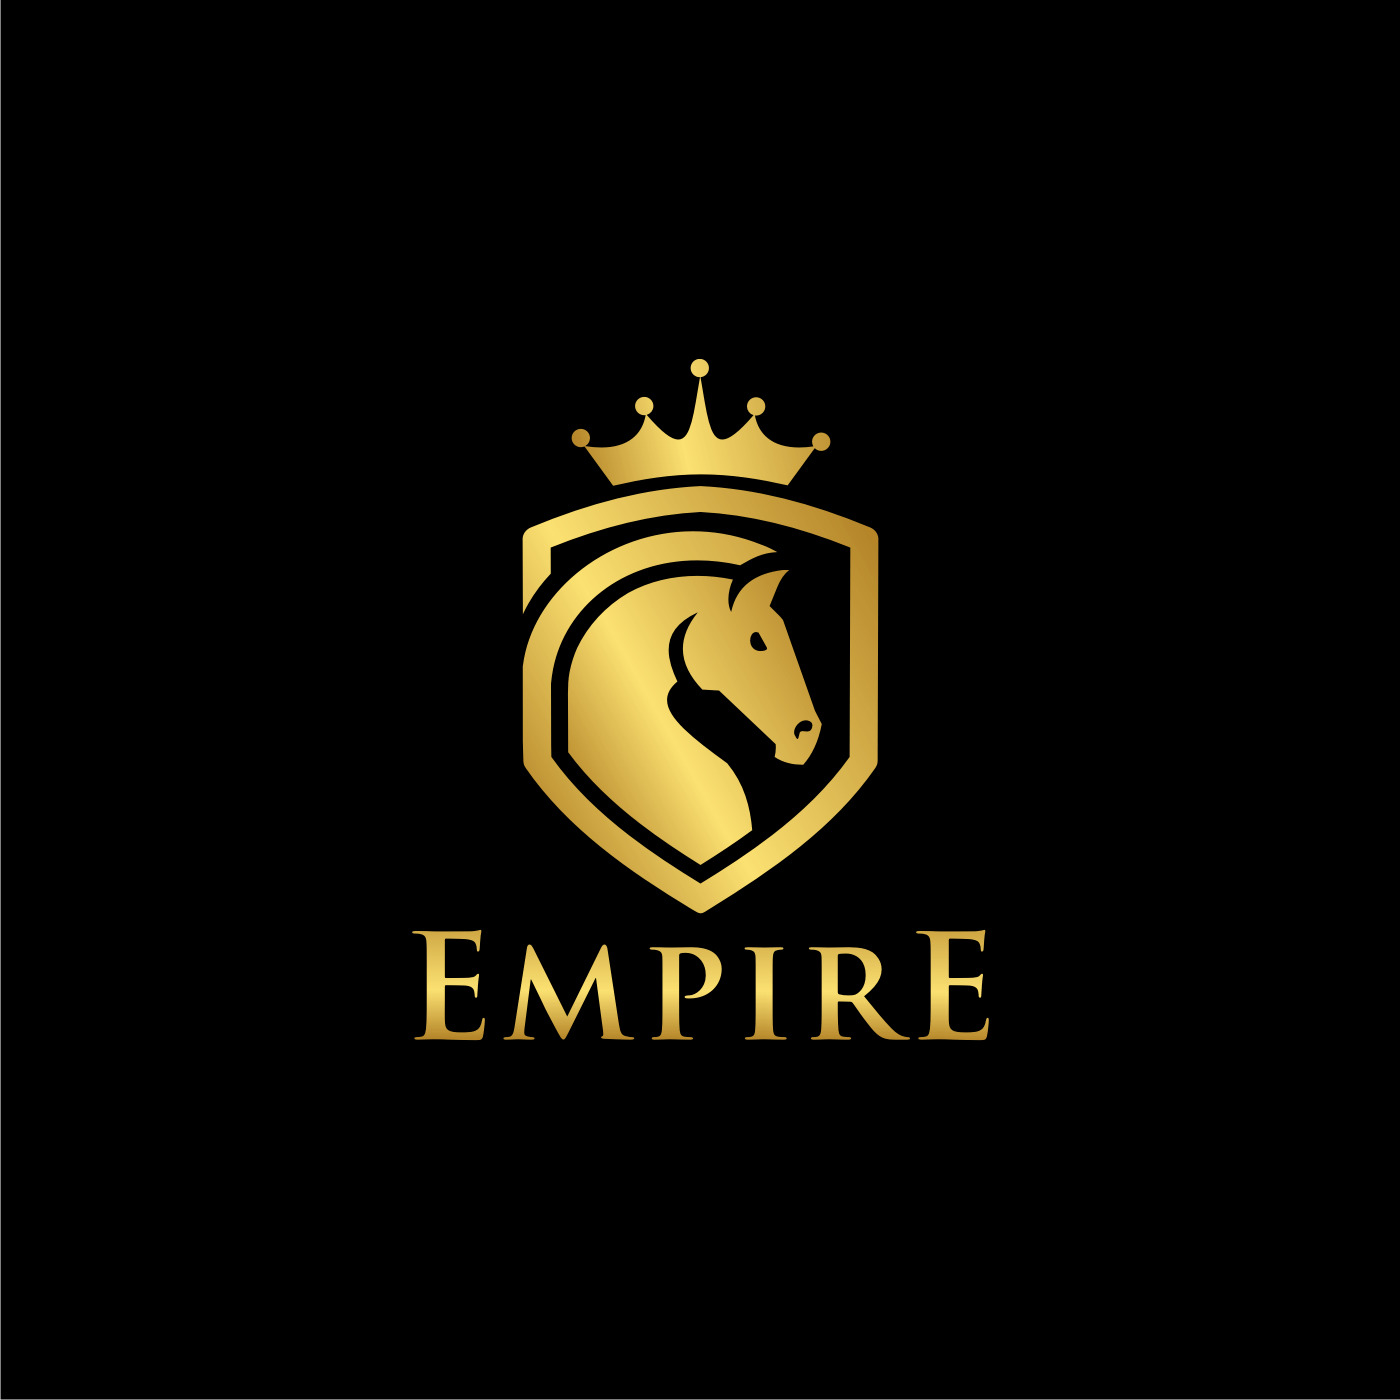 Empire Logo - Design by kupukupu_design. EMPIRE needs emblem style logo